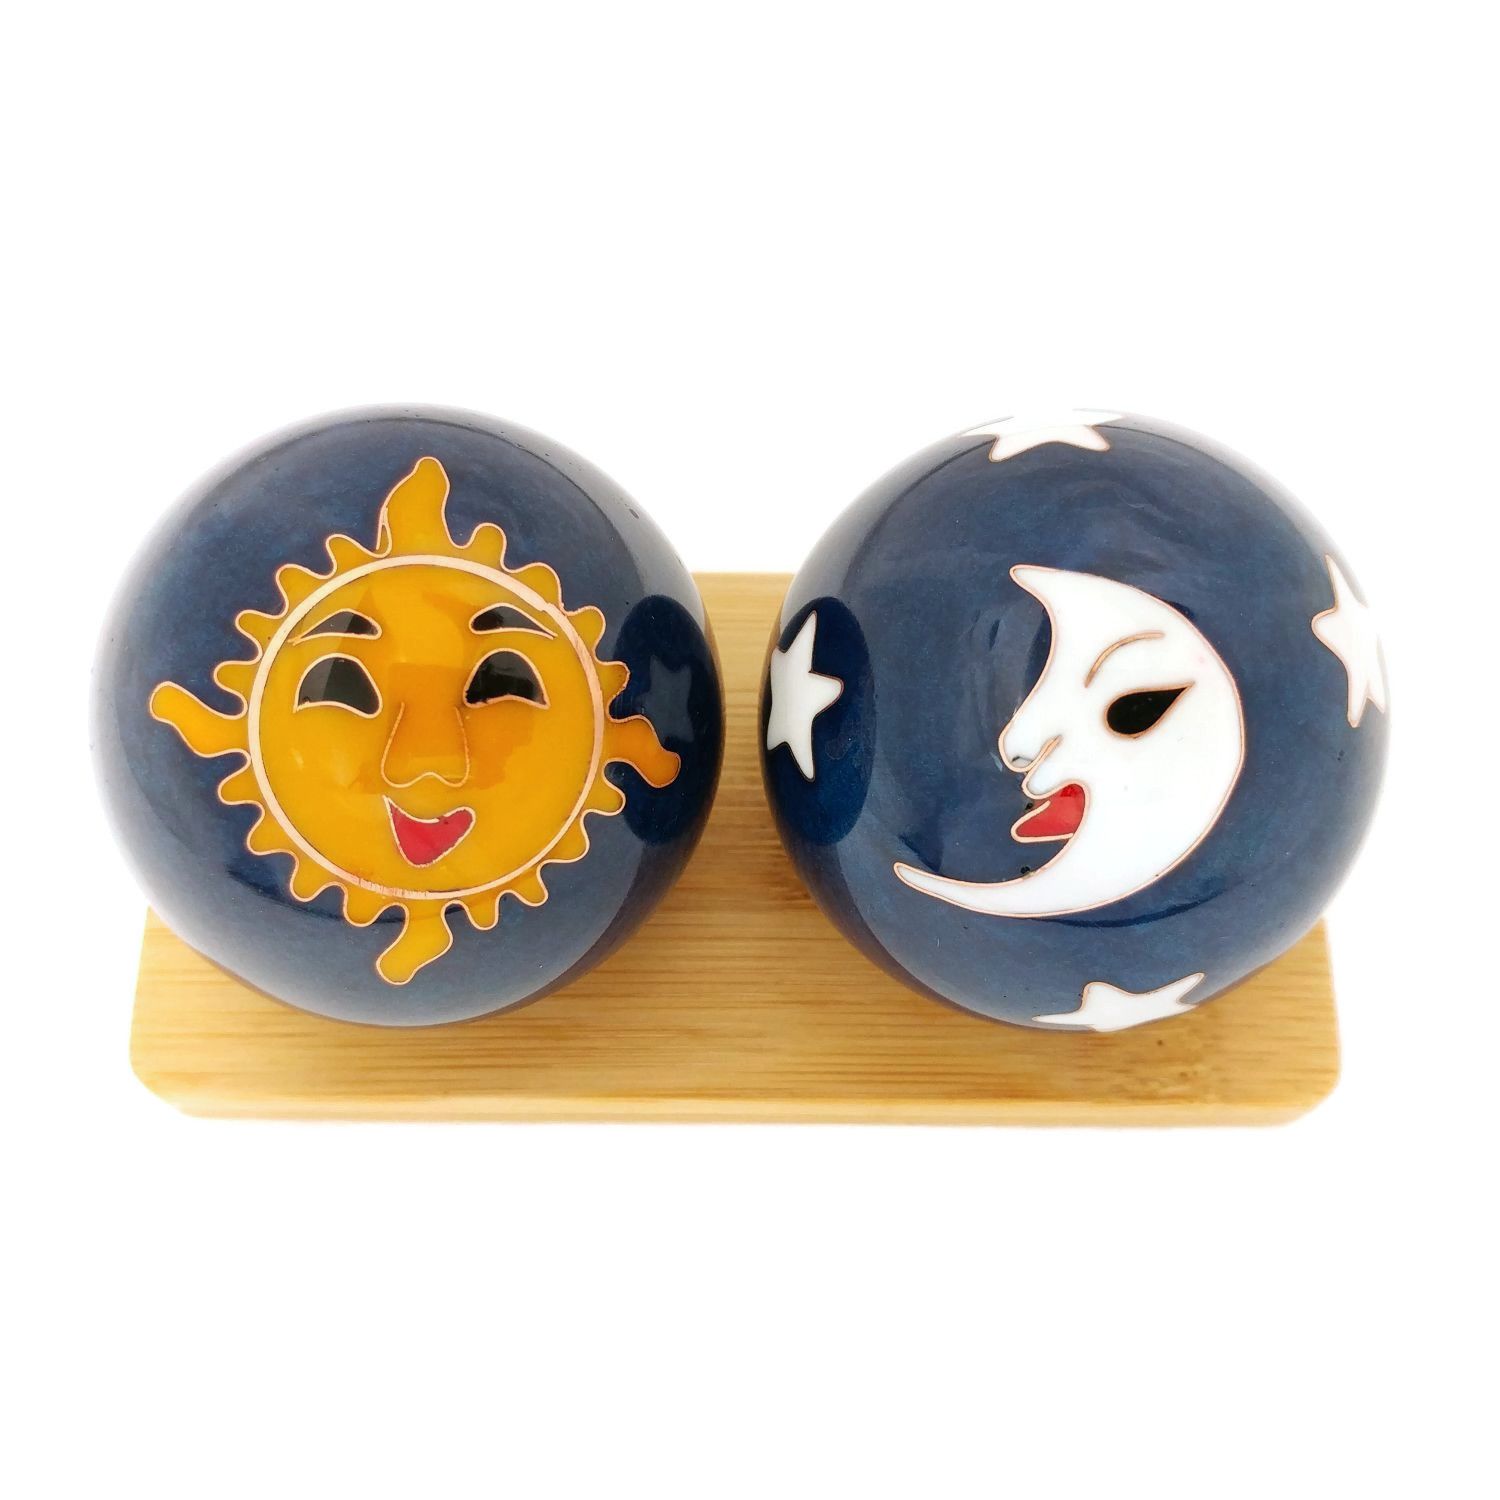 Sunned balls. Шары баодинг на деревянной подставке. Шары баодинг солнце и Луна. Sun balls. Baoding balls.